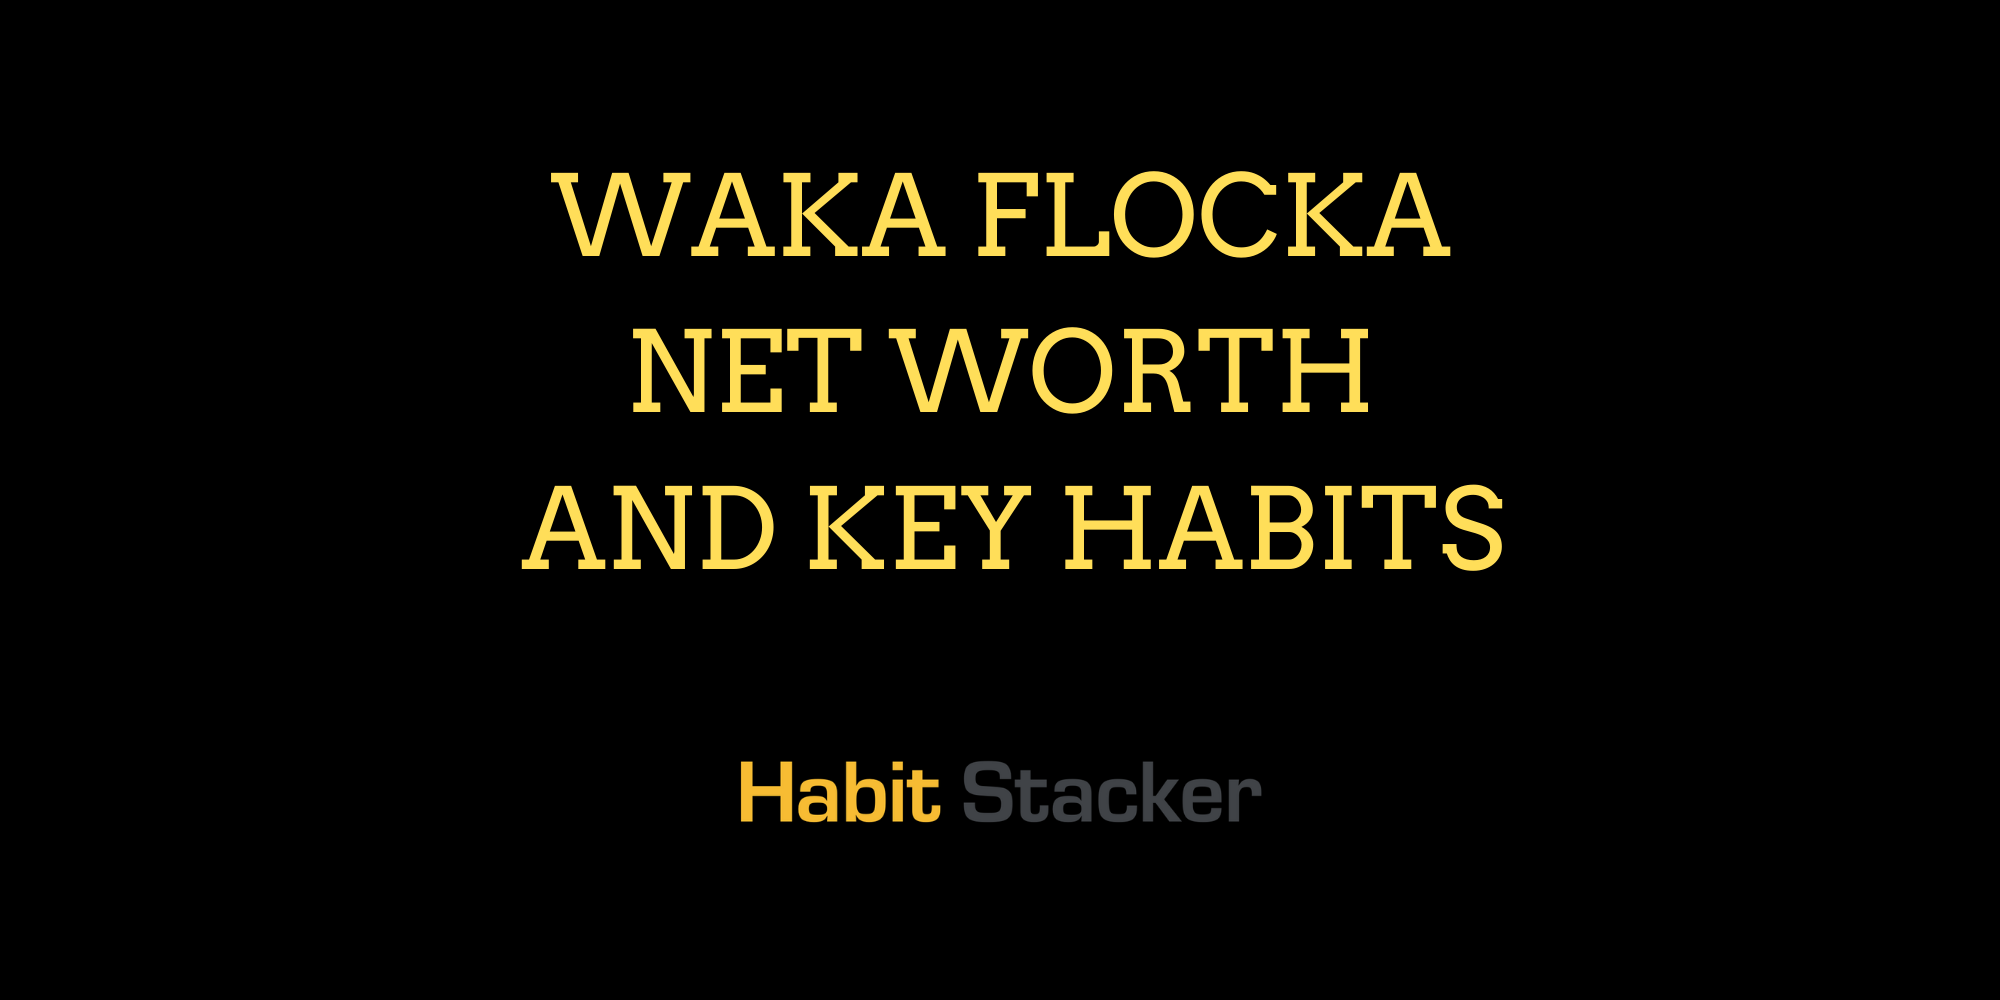 Waka Flocka Net Worth and Key Habits